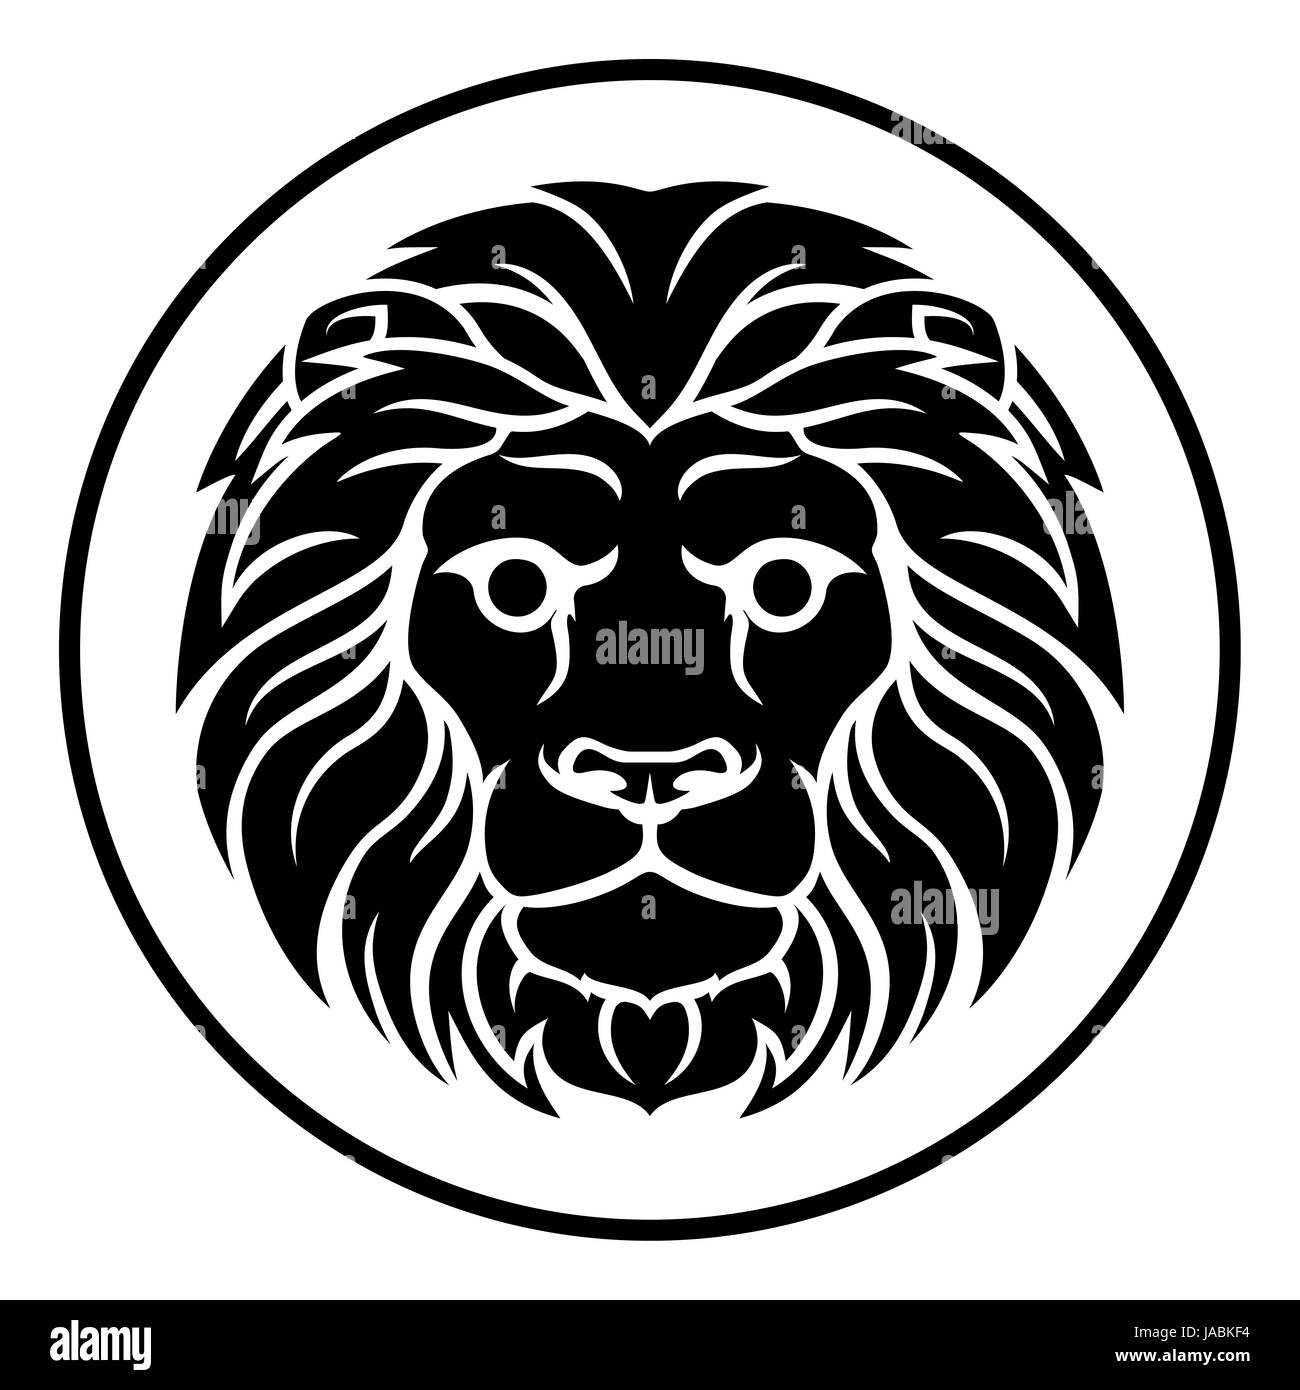 Circle Leo lion horoscope astrology zodiac sign icon Stock Photo